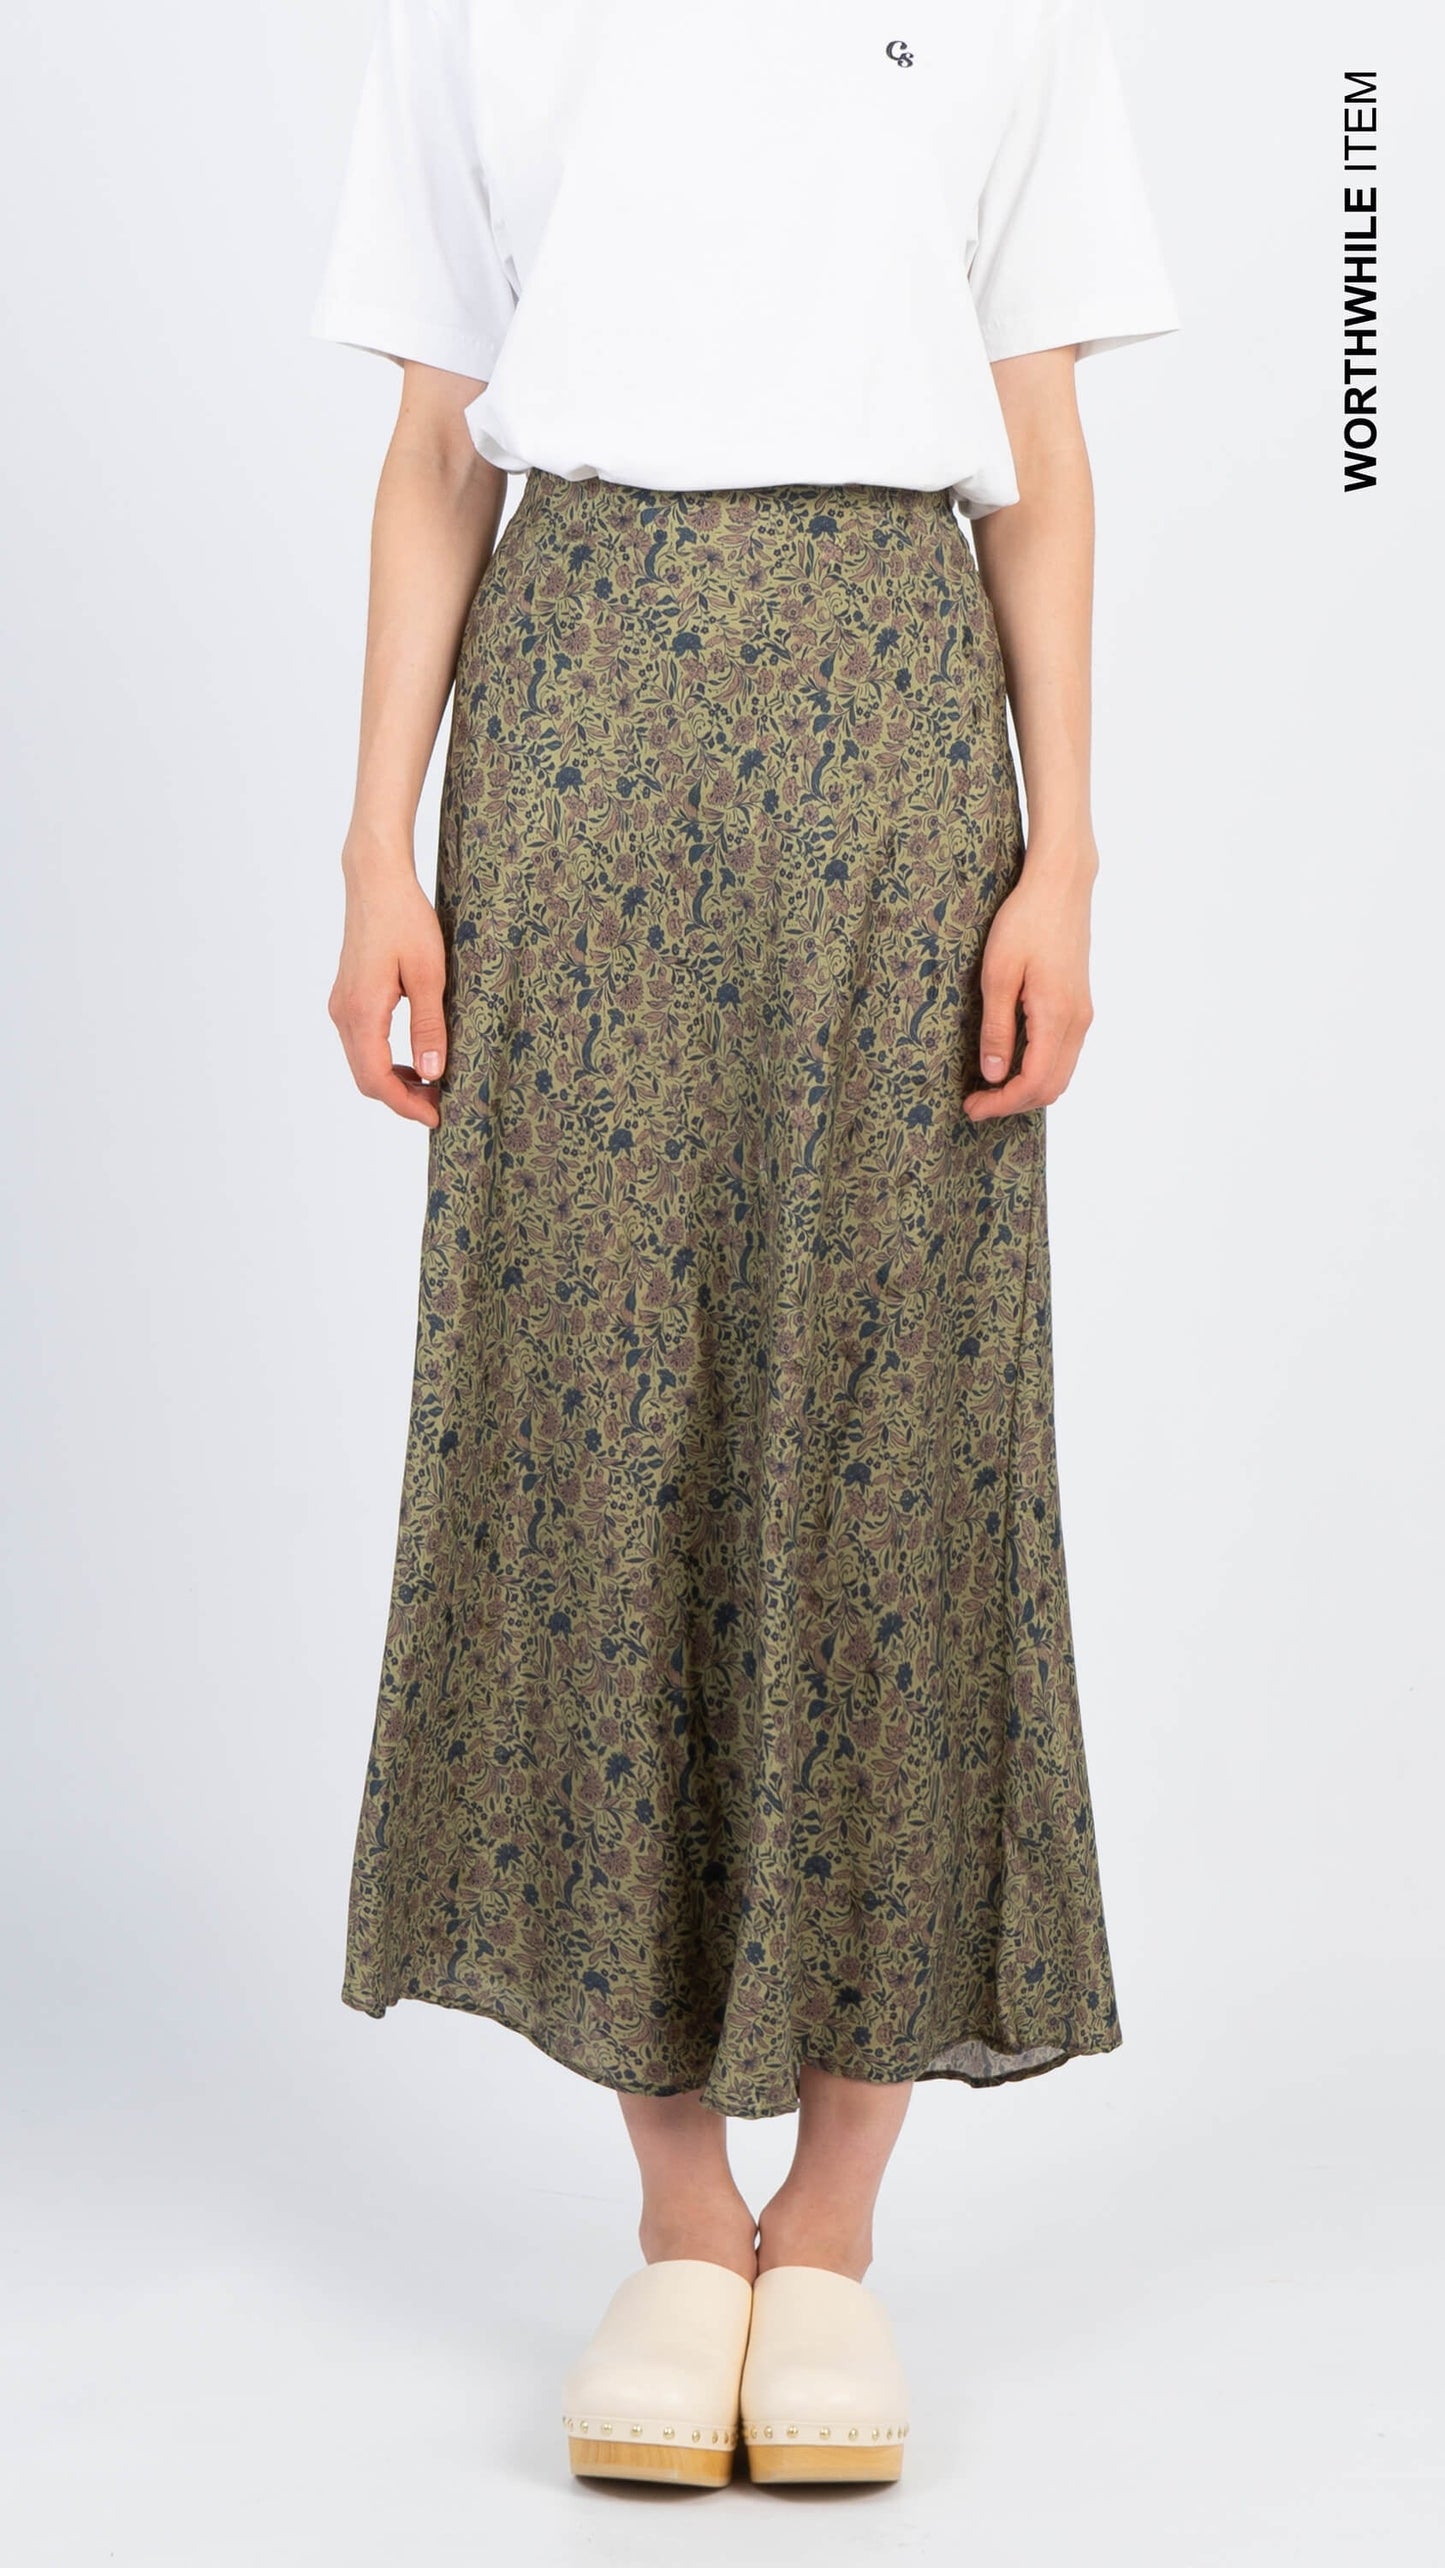 Meadow skirt